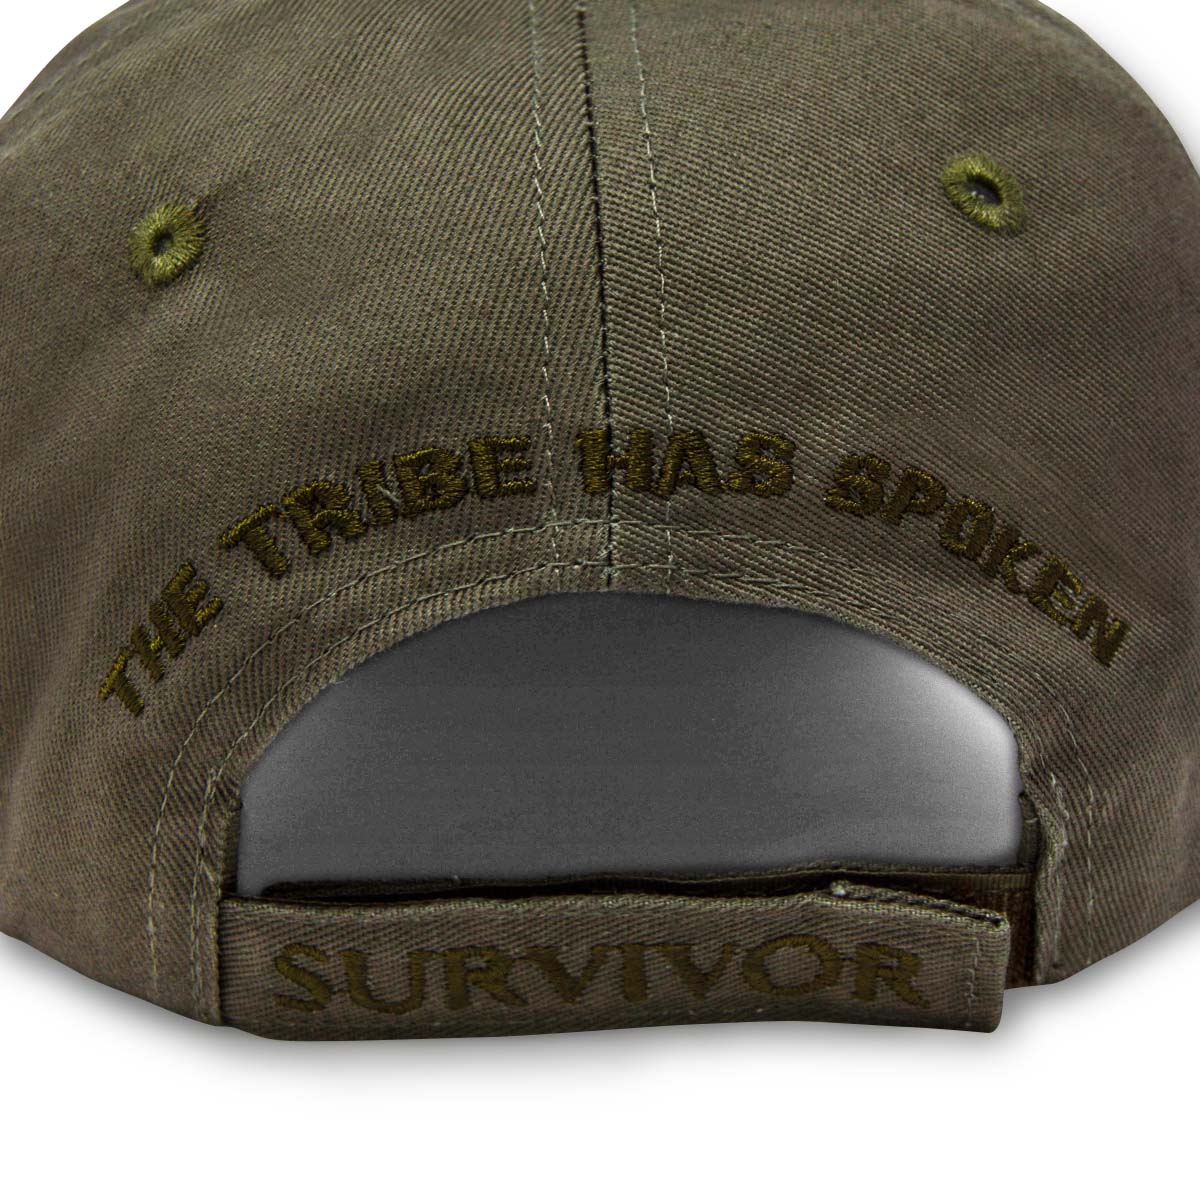 Survivor Leather Logo LED Baseball Cap